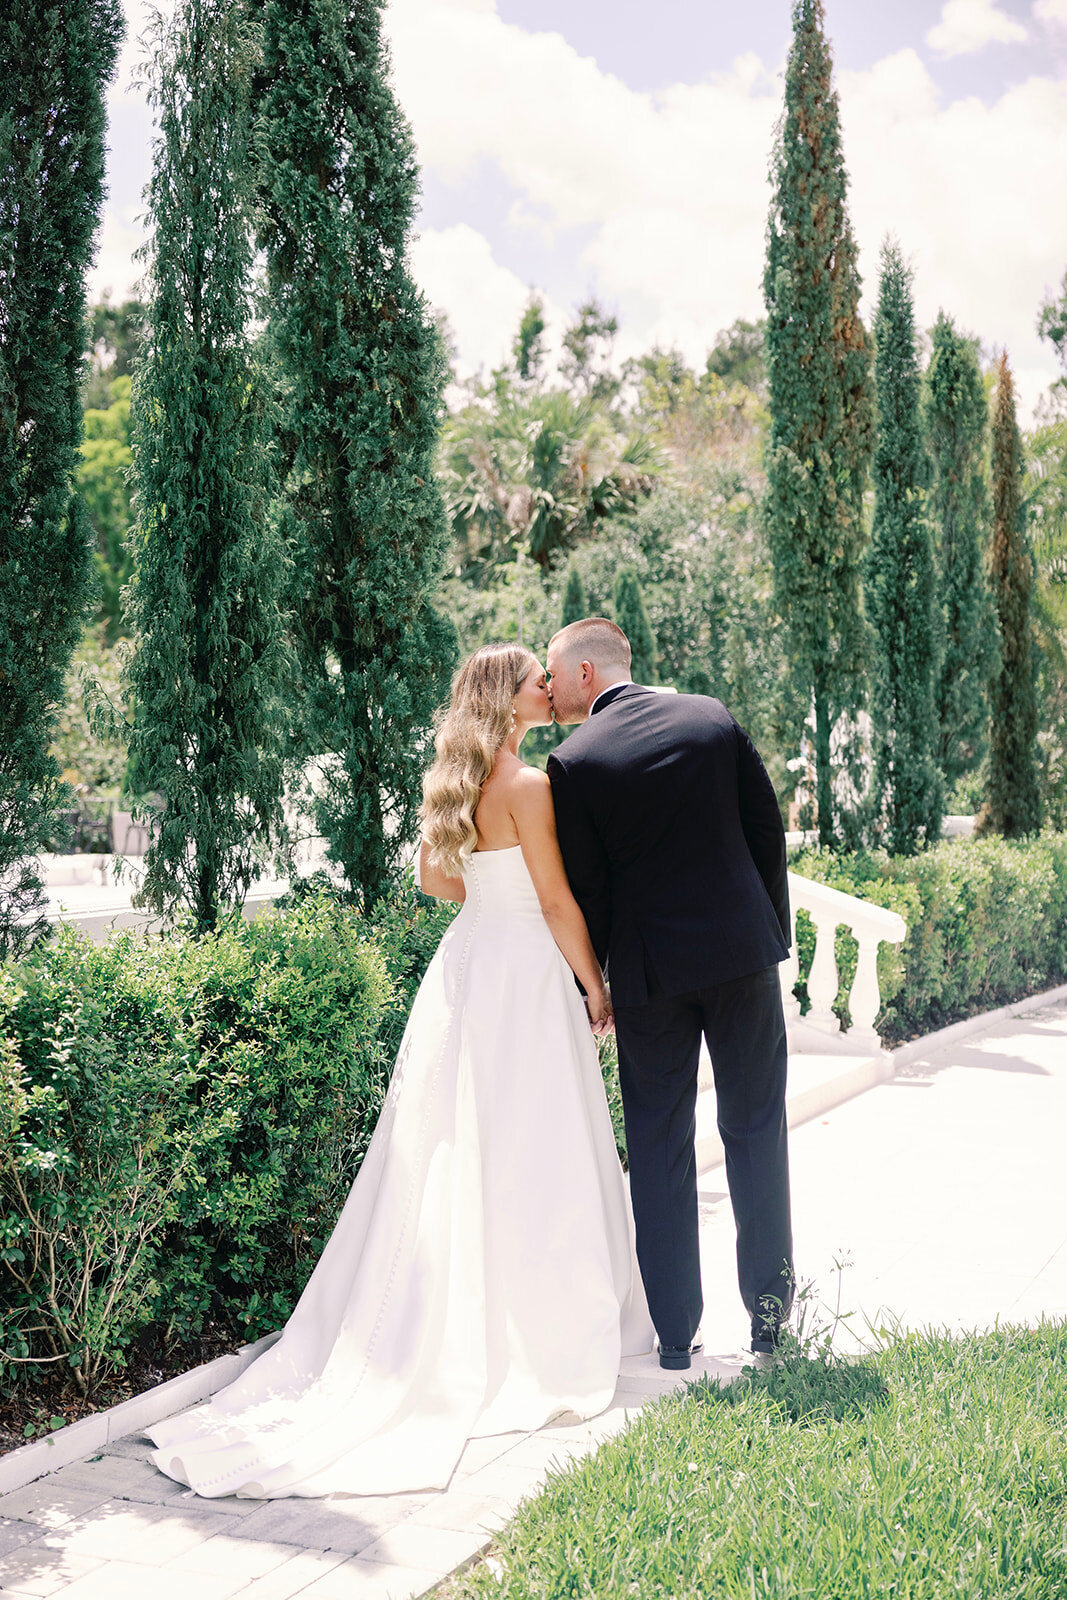 CORNELIA ZAISS PHOTOGRAPHY LEAH + ROBERT'S WEDDING 0254_websize